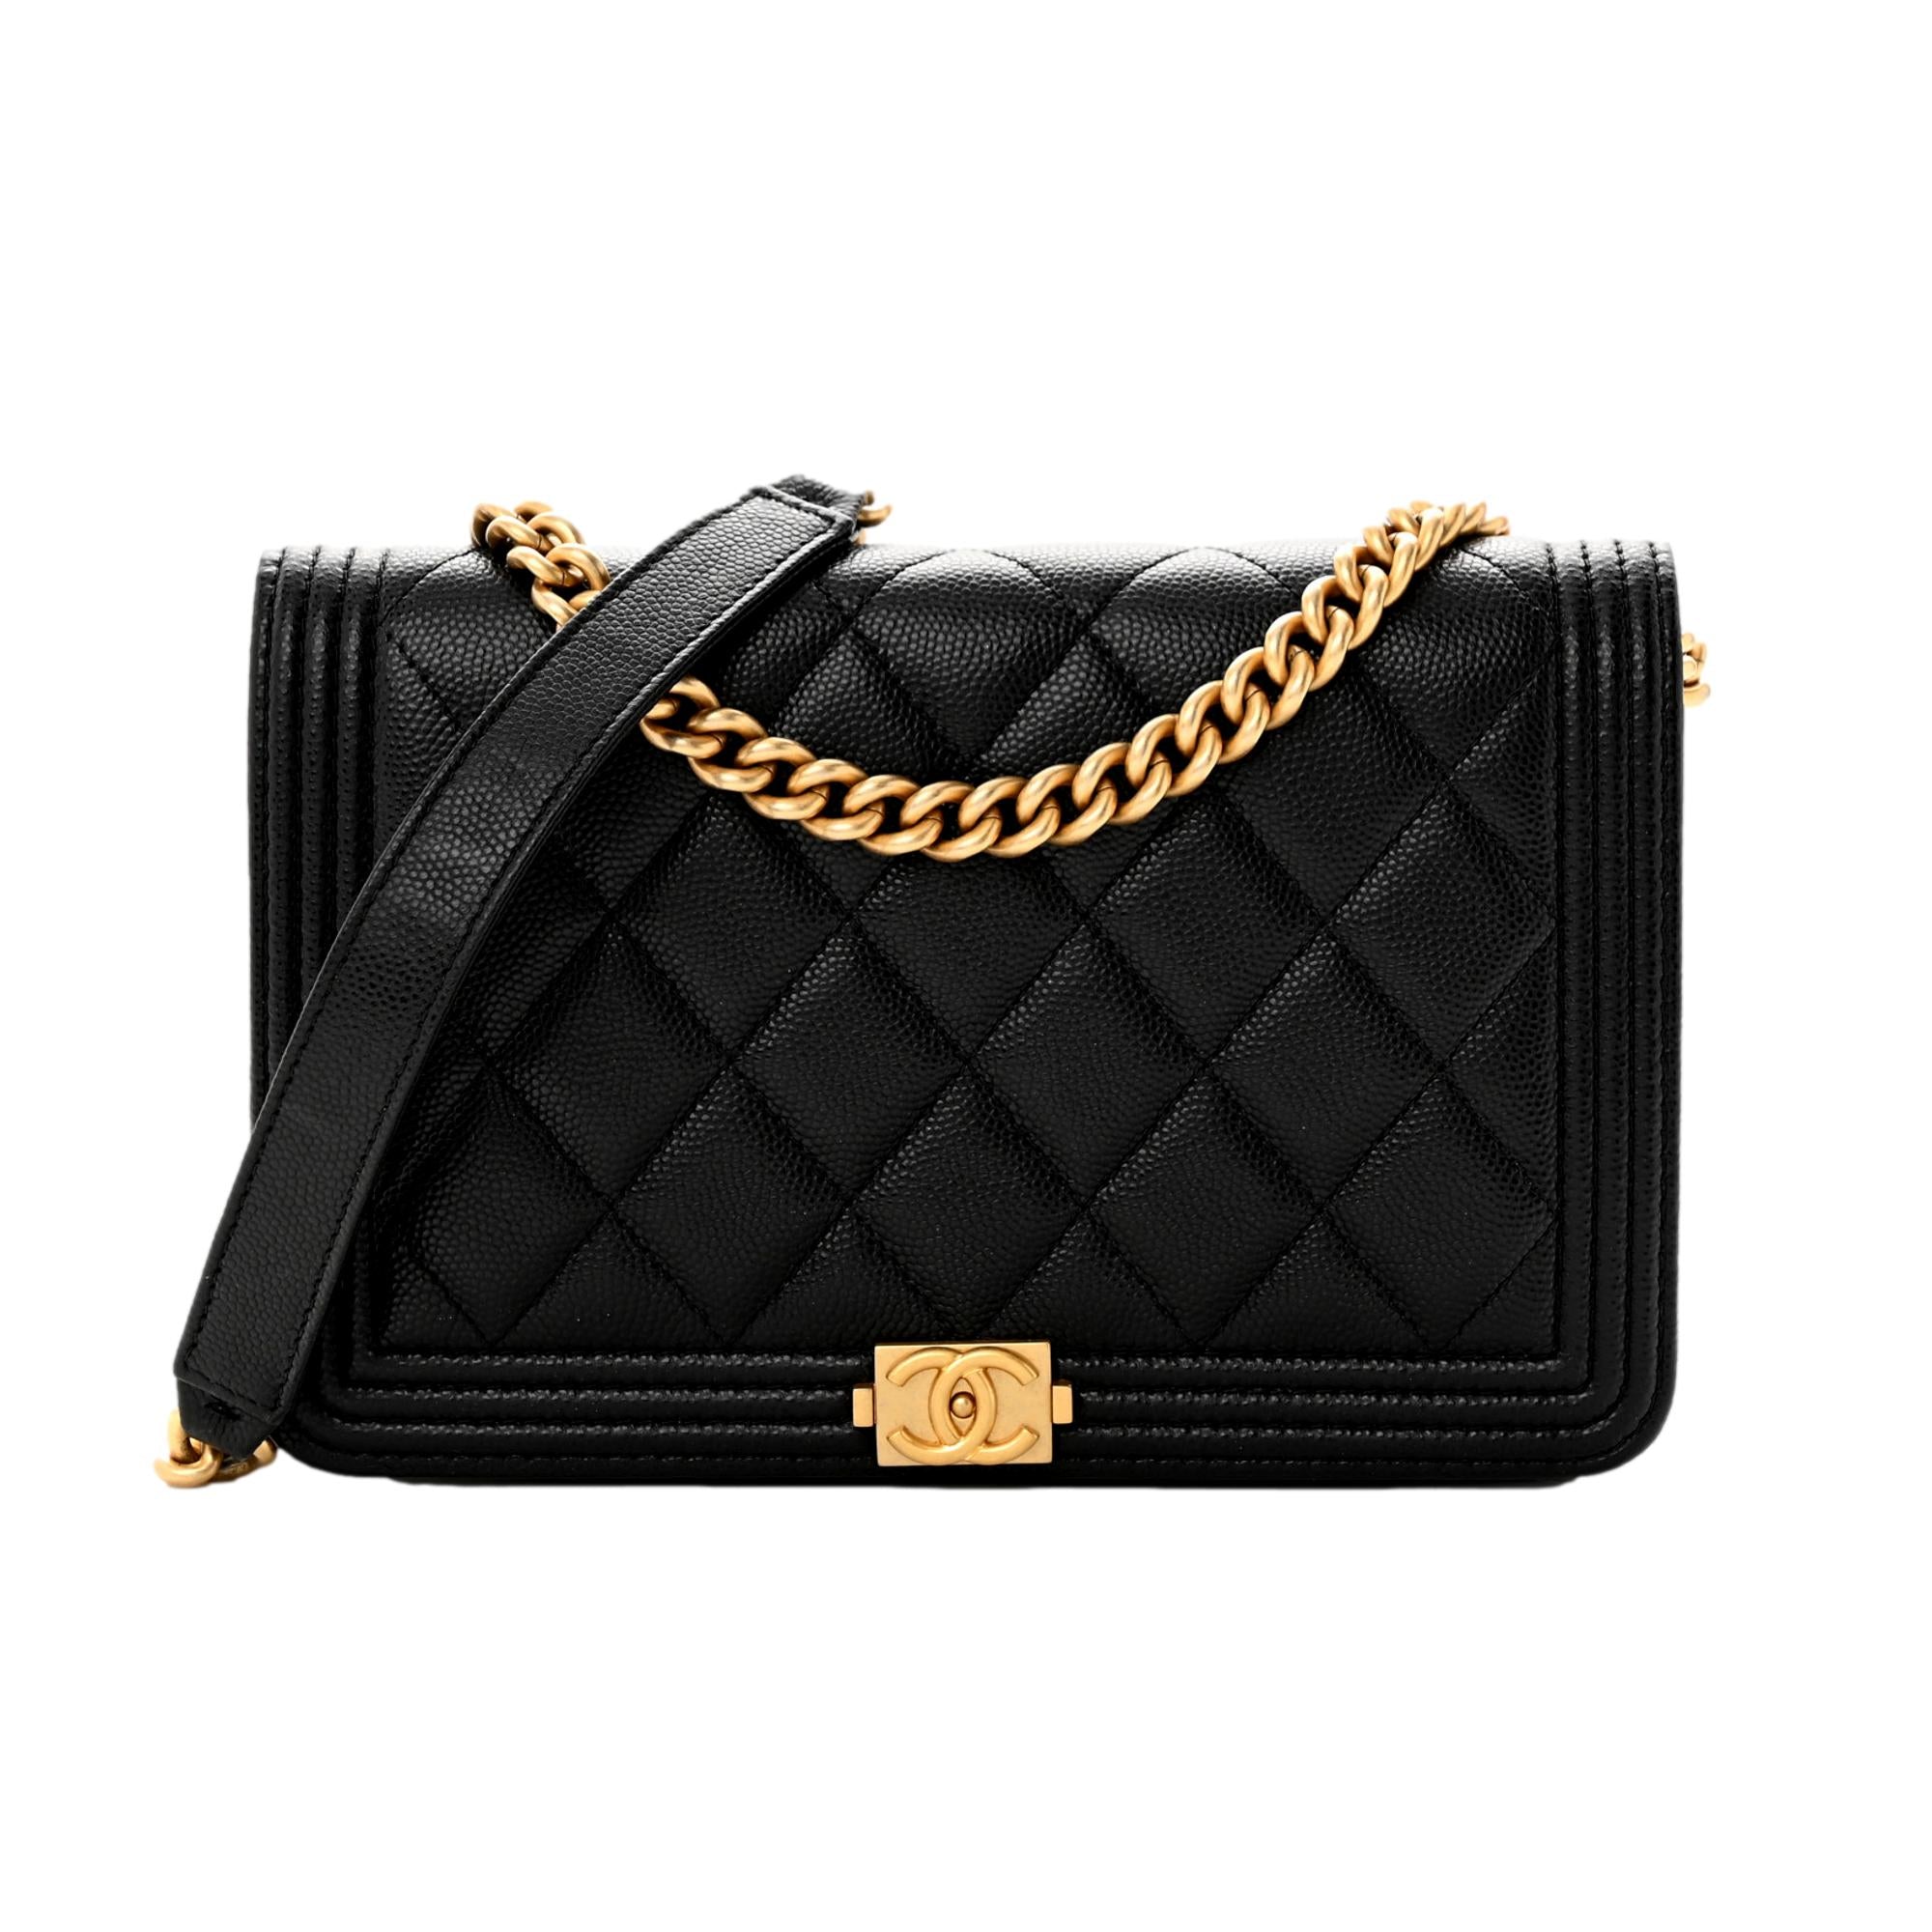 Chanel Boy Quilted Black Caviar Leather Wallet on Chain Crossbody Bag - LUXURYMRKT